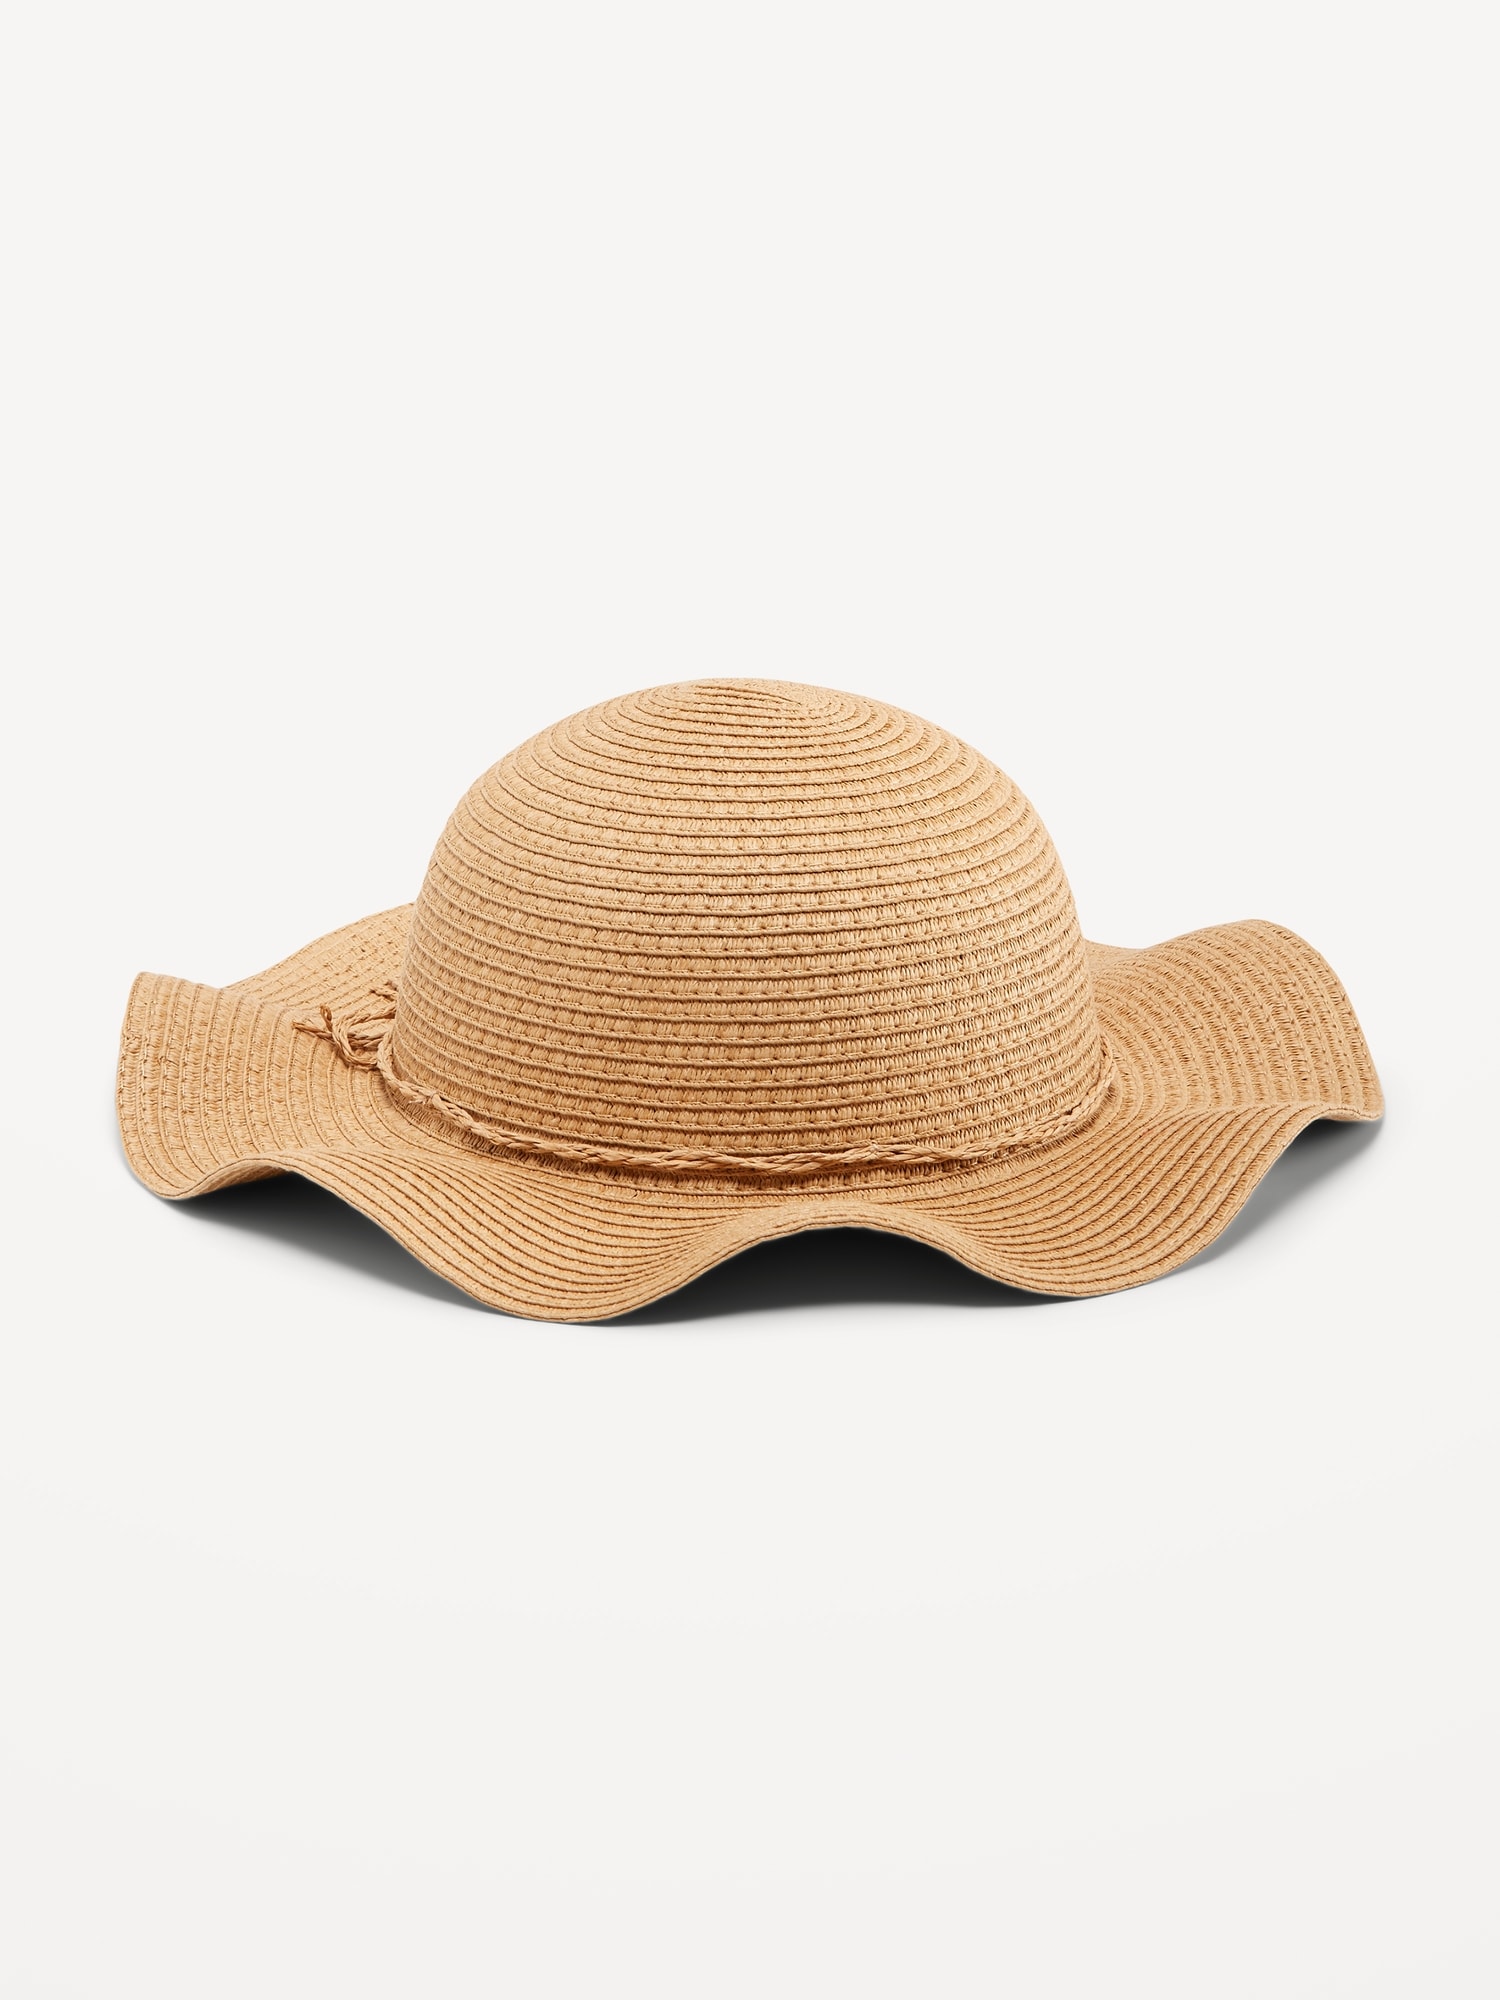 Unisex Wavy Straw Hat for Toddler